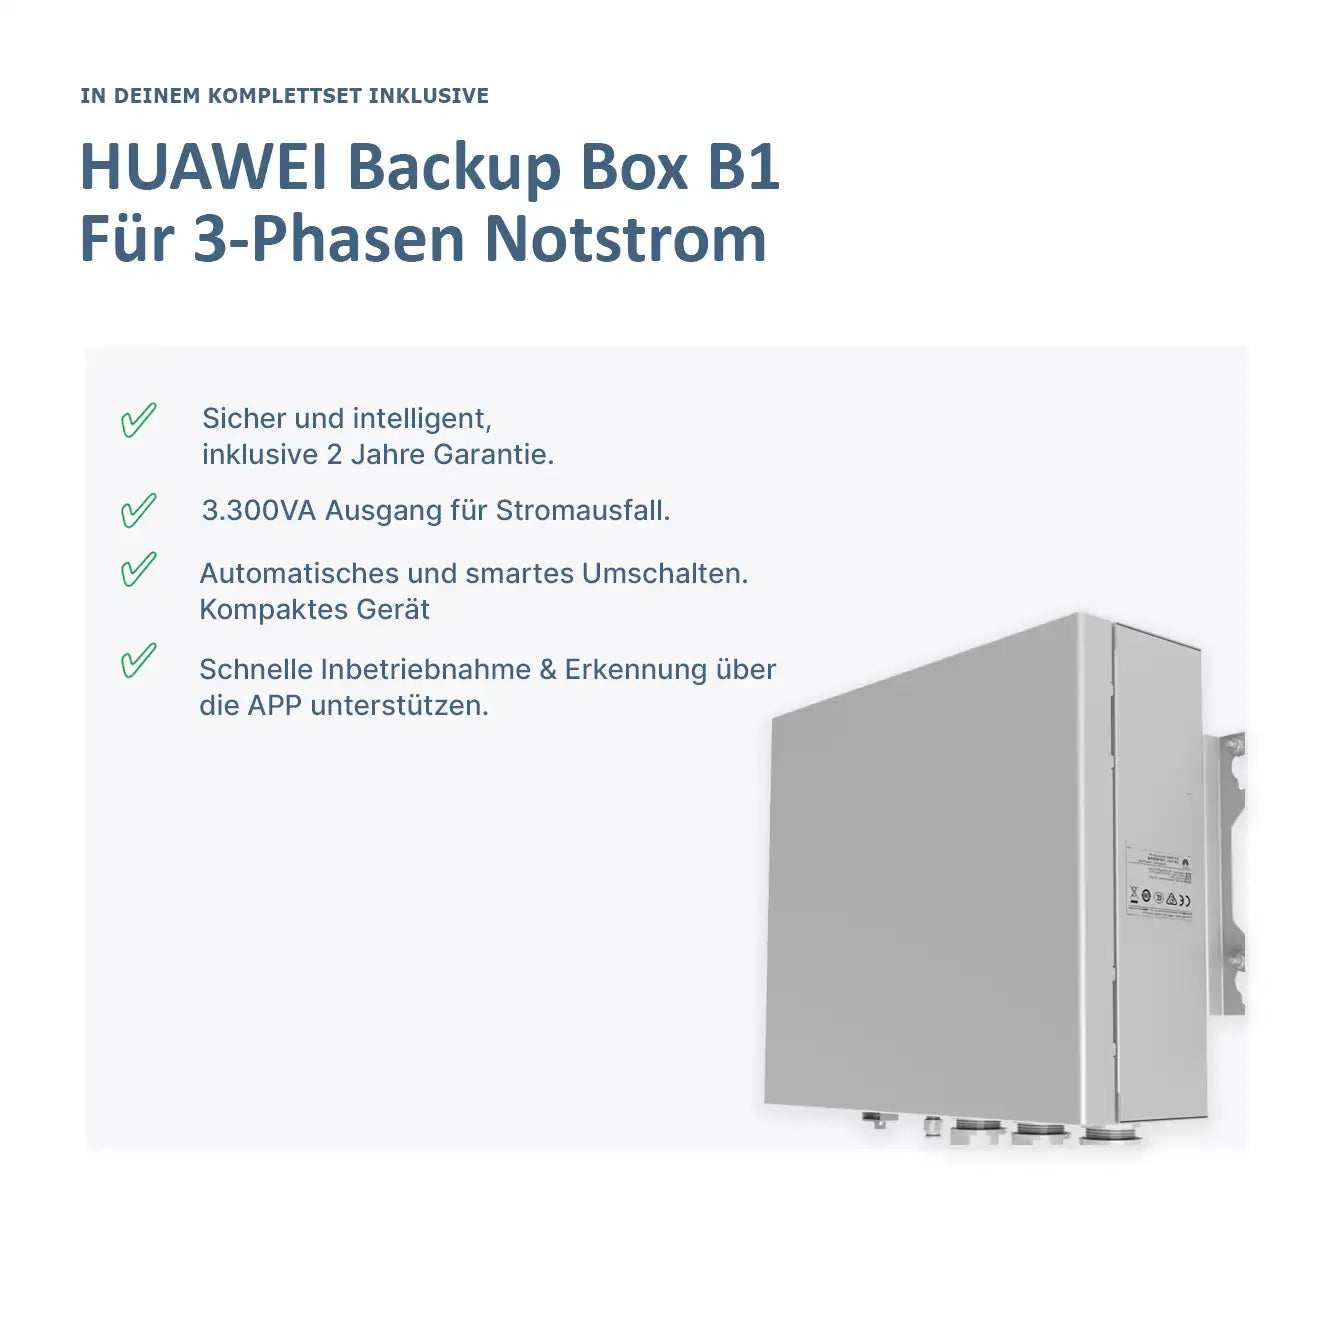 Complete Set - Huawei Backup Box B1